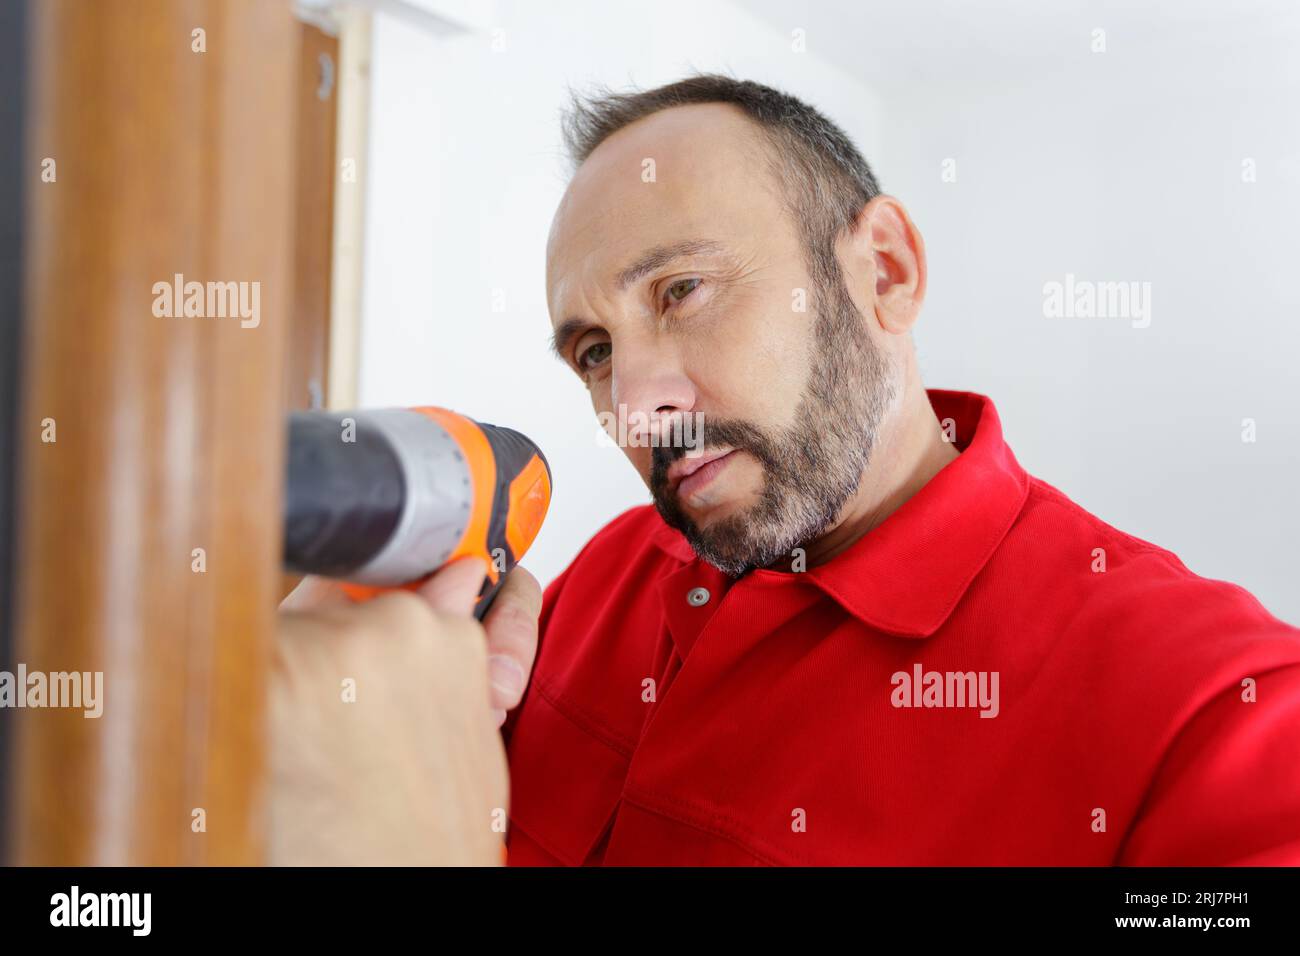 hardworker man drilling wooden frame Stock Photo